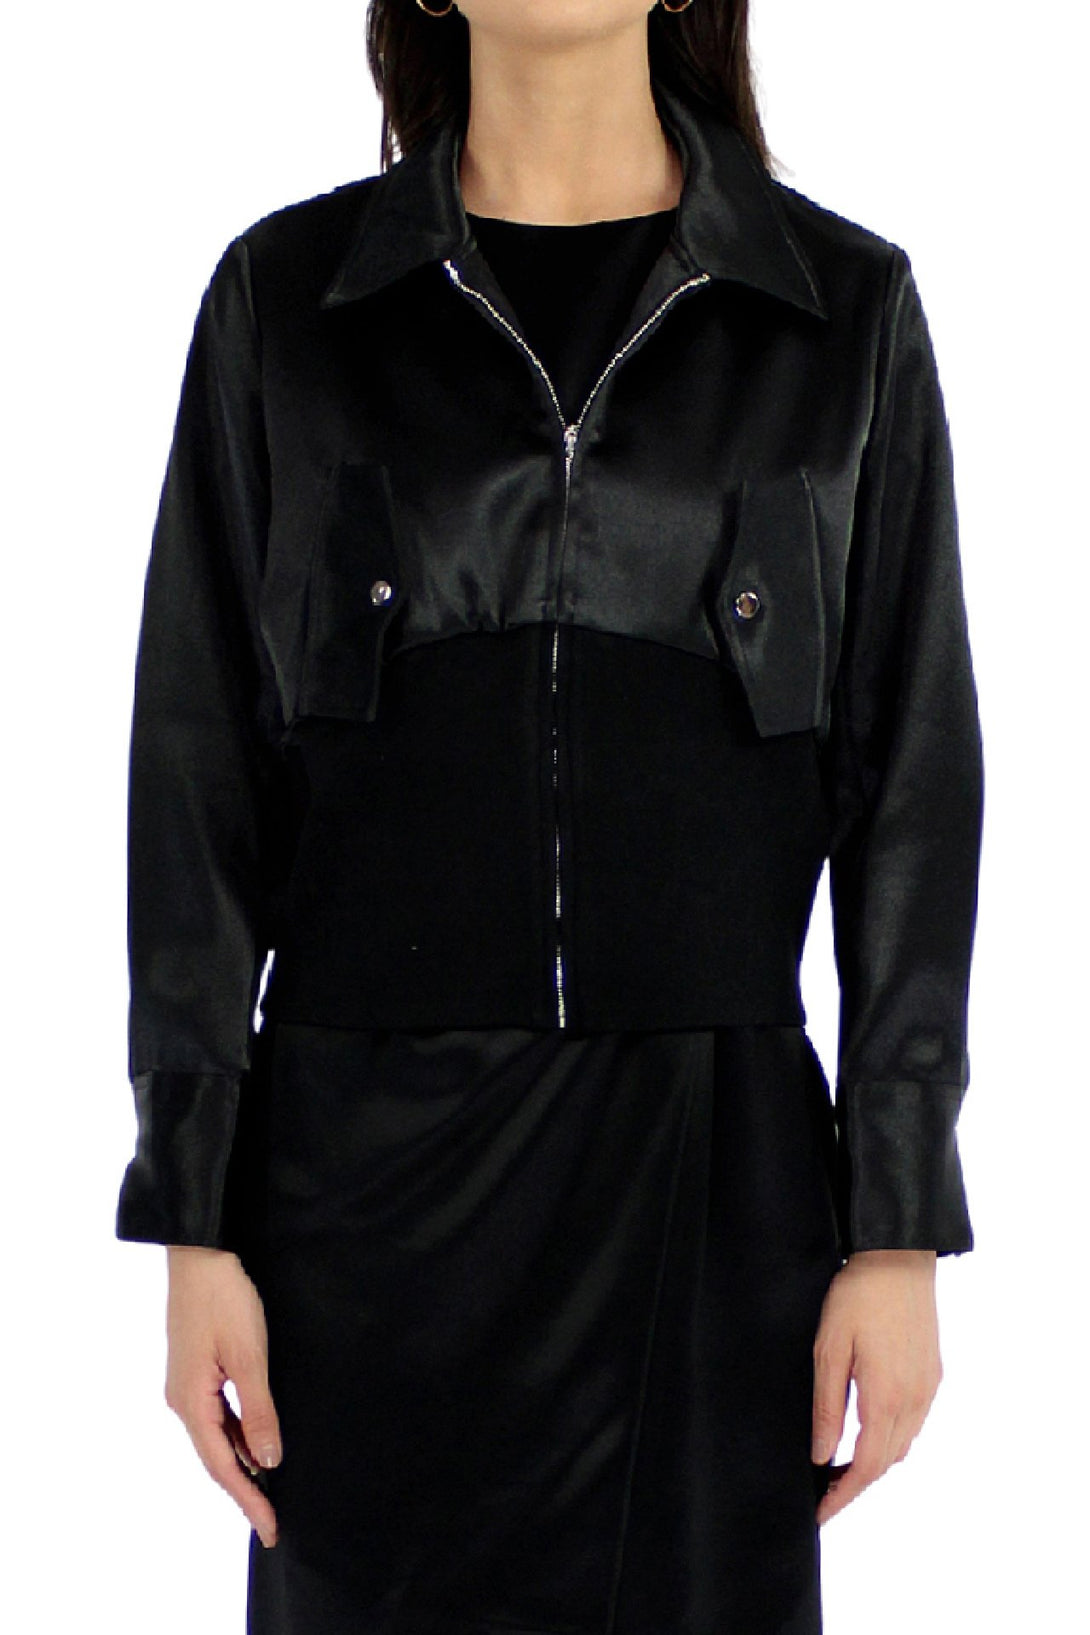 Women-Designer-Black-Jacket-By-Kyle-Richard